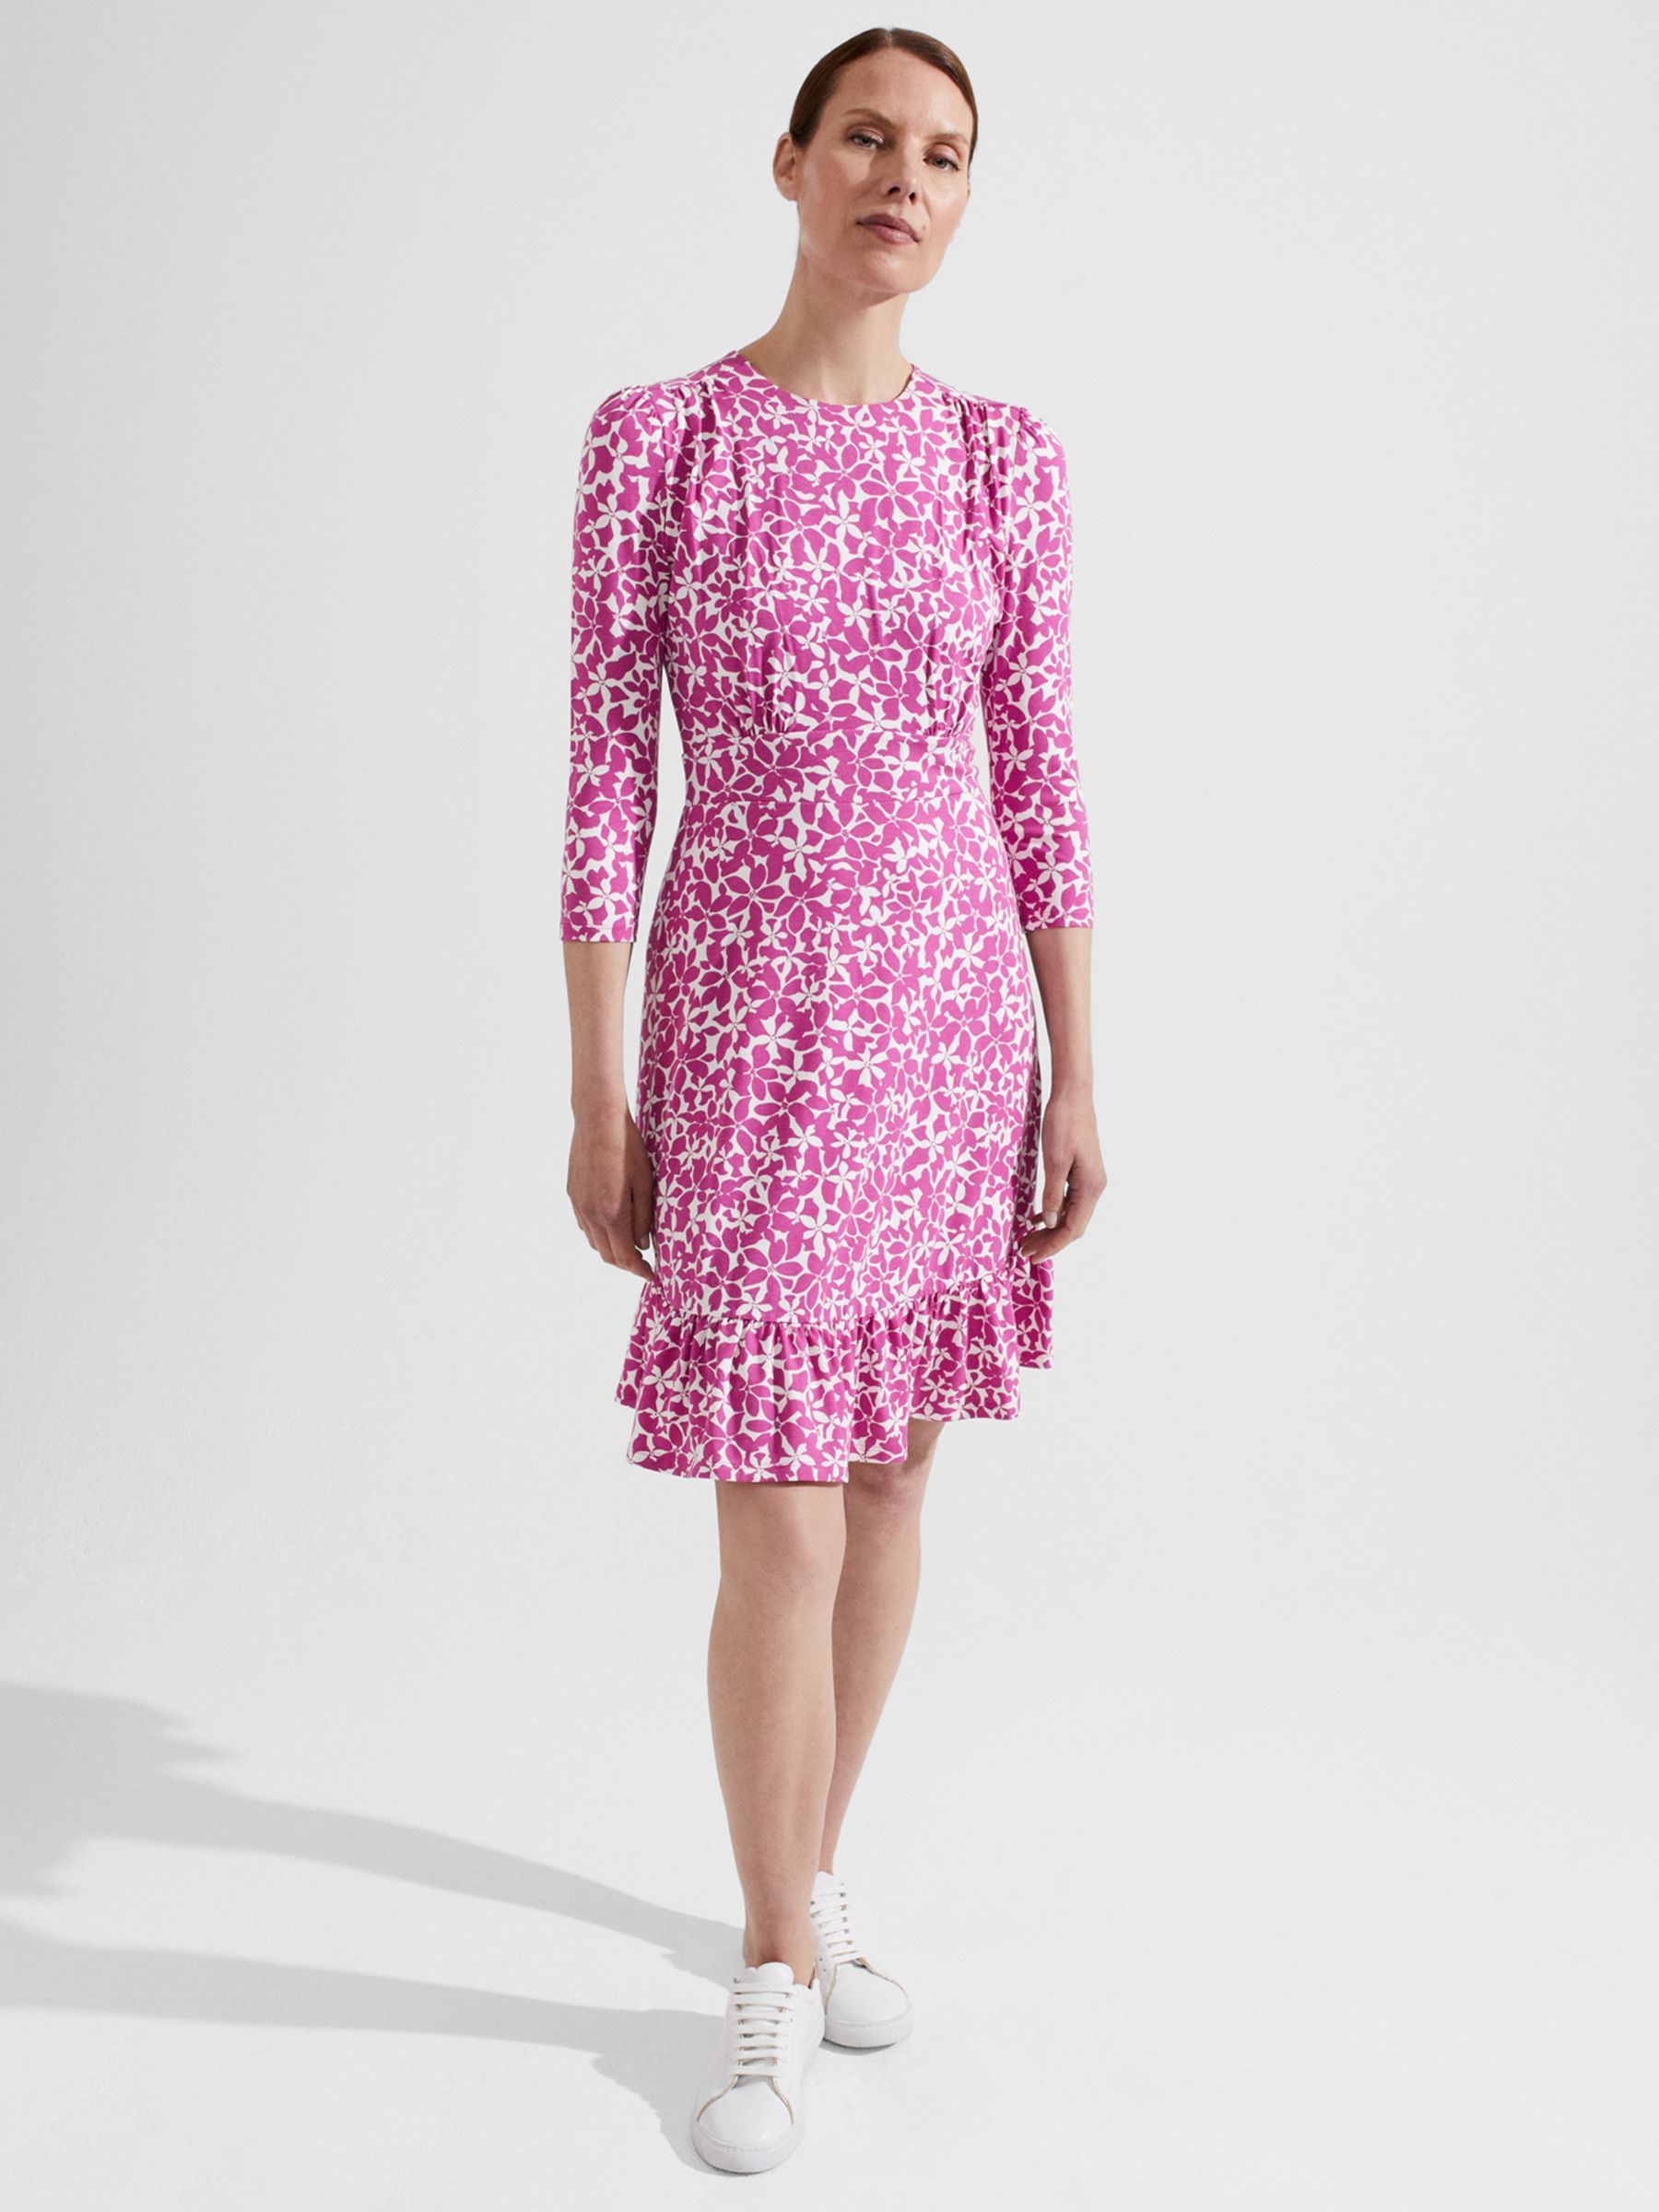 Hobbs Ami Floral Jersey Dress, Pink/Multi at John Lewis & Partners